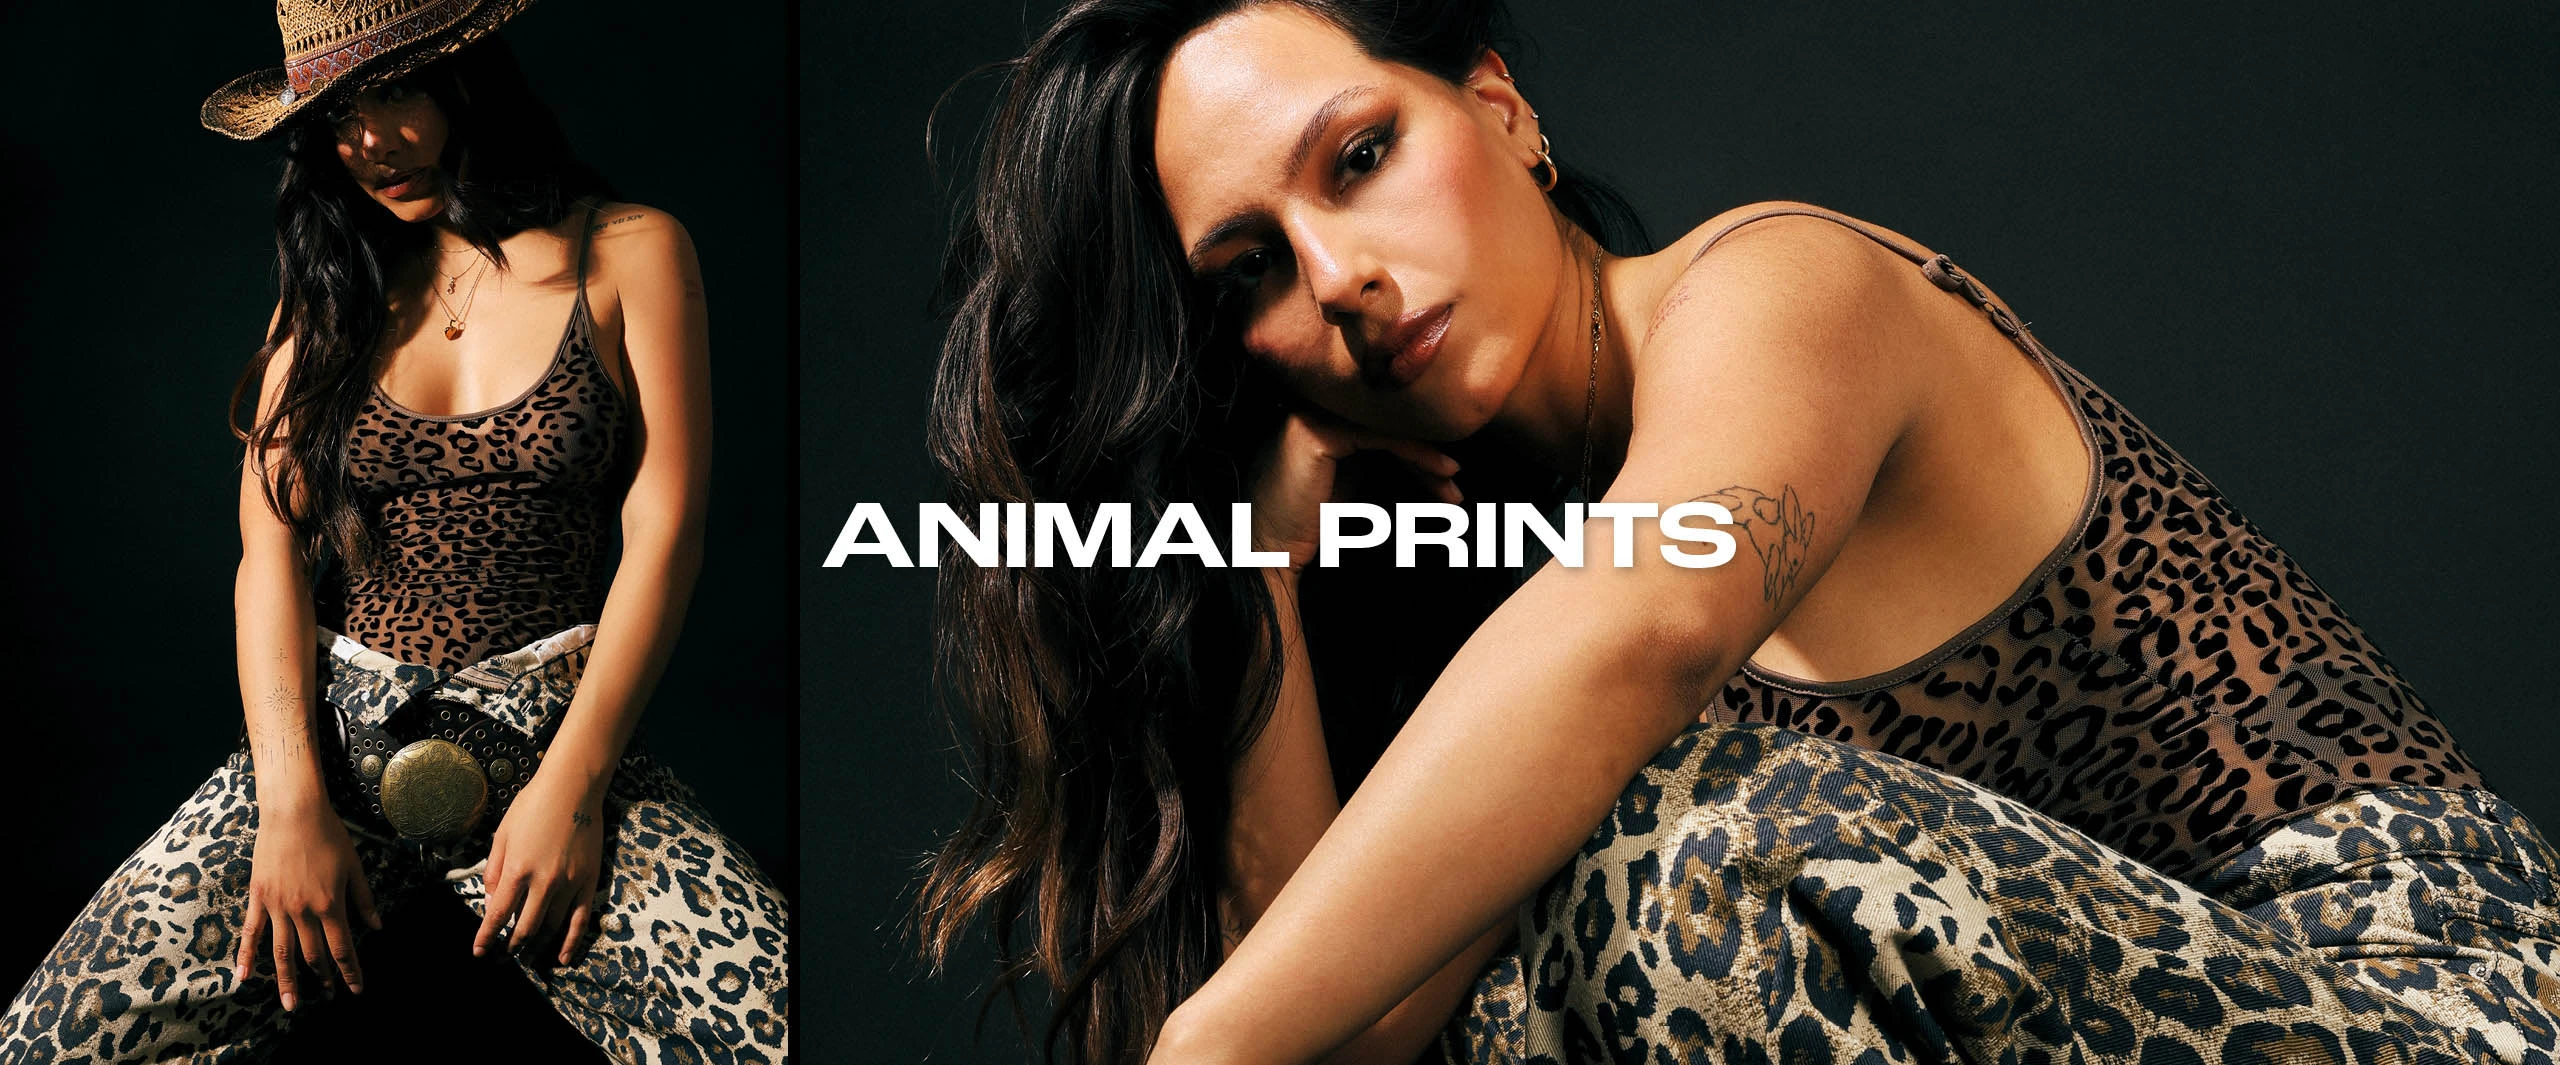 Acheter Animal prints Suisse